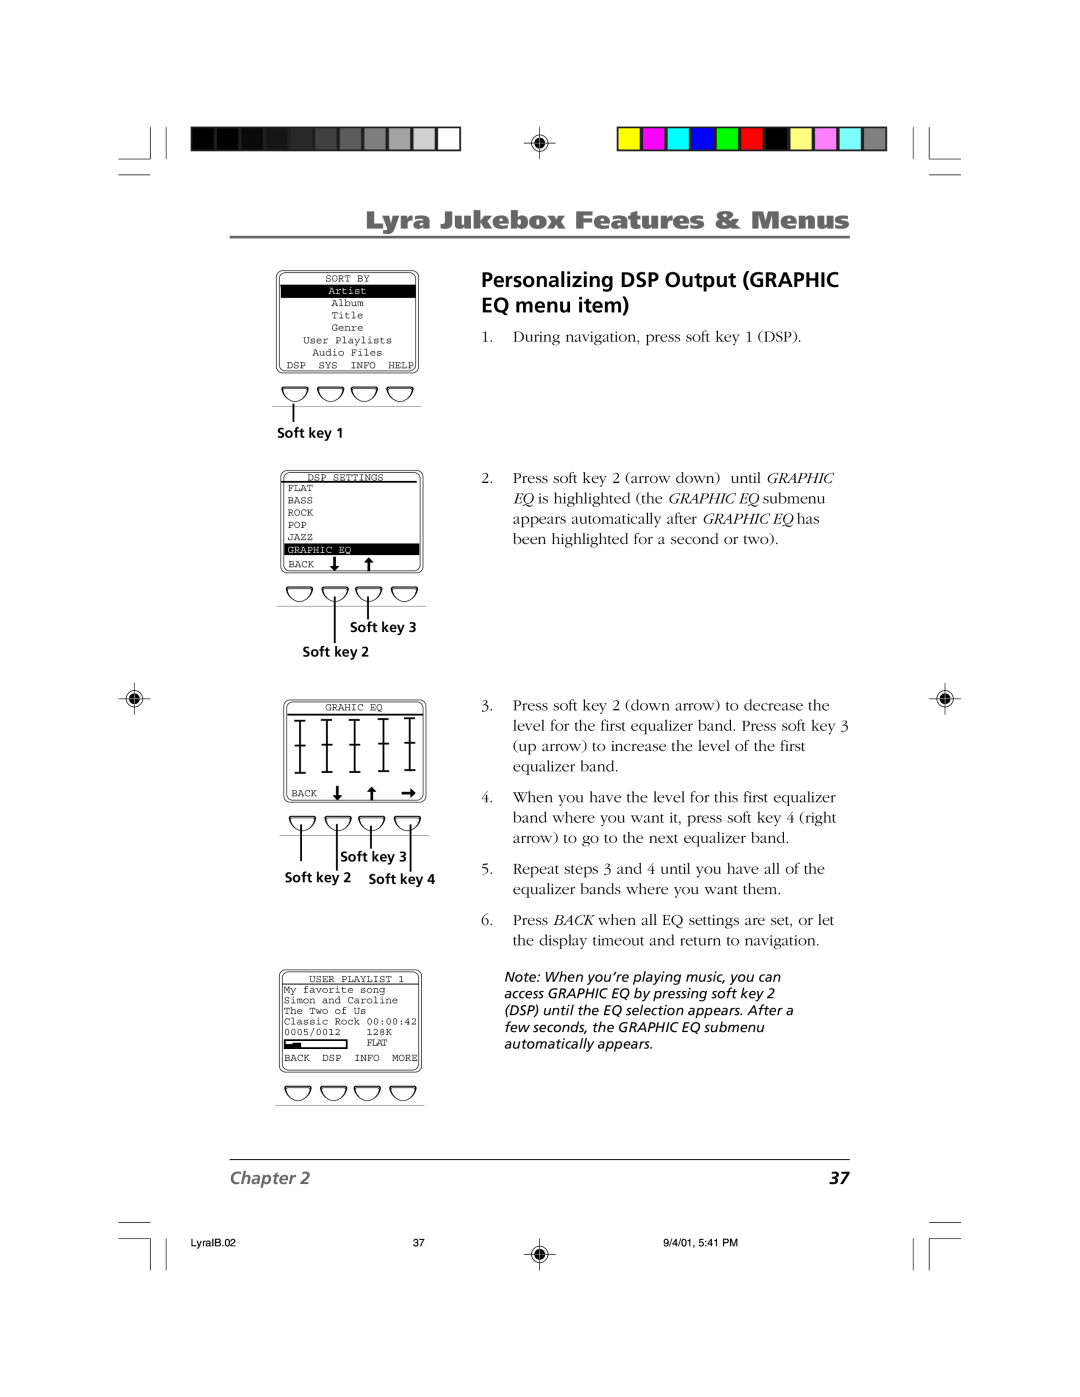 RCA RD2800 manual Personalizing DSP Output GRAPHIC EQ menu item, Lyra Jukebox Features & Menus, Chapter 